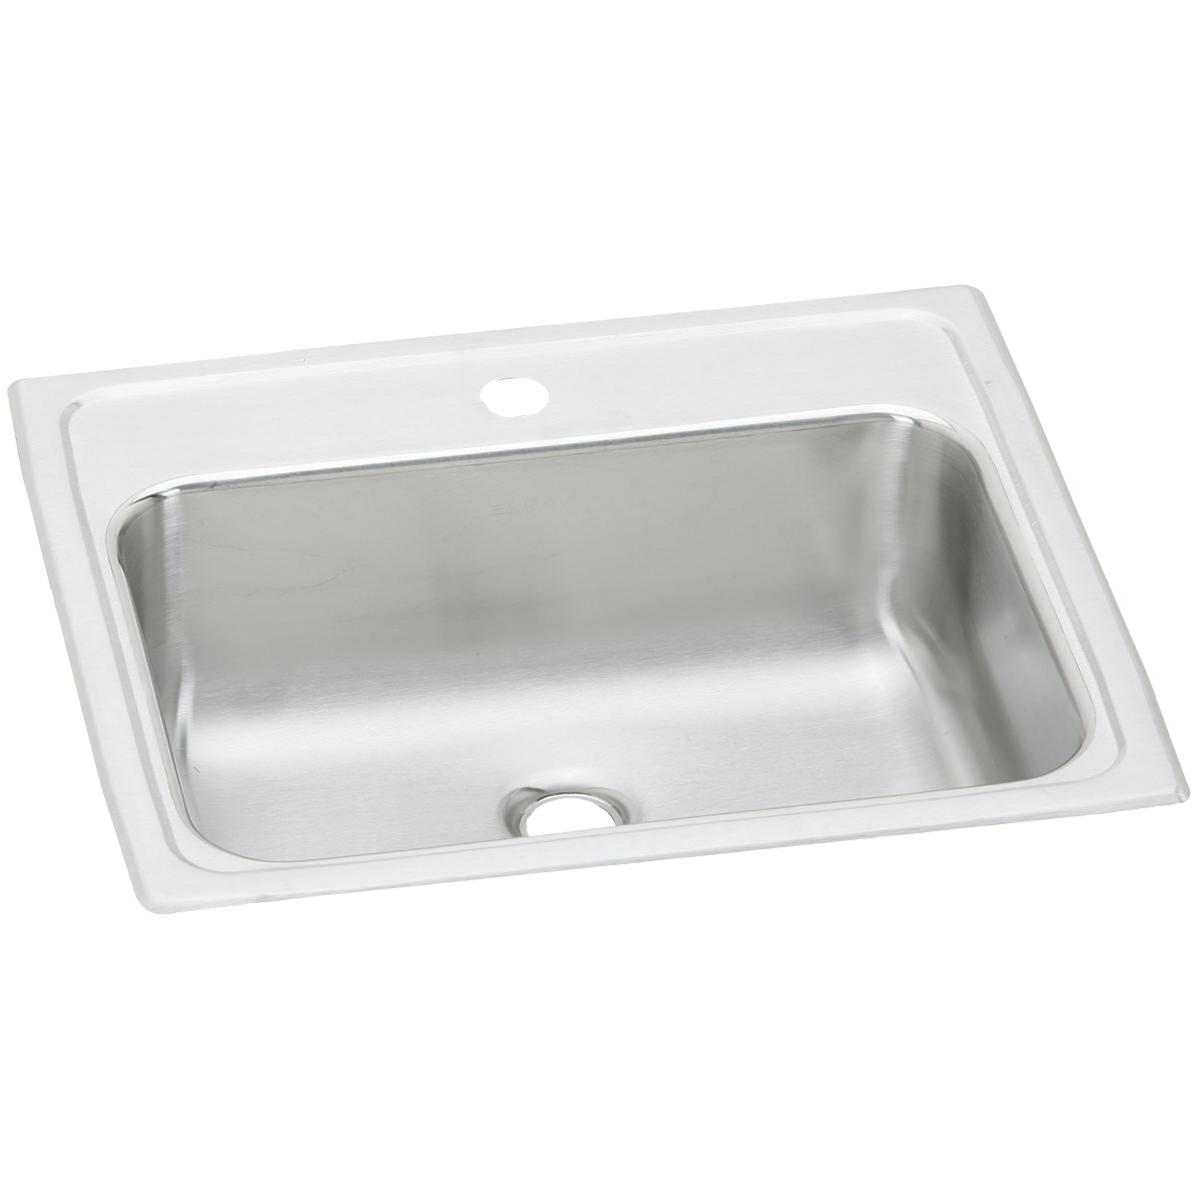 Elkay Celebrity 19" x 17" x 6-1/8" Single Bowl Drop-in Bathroom Sink with Overflow